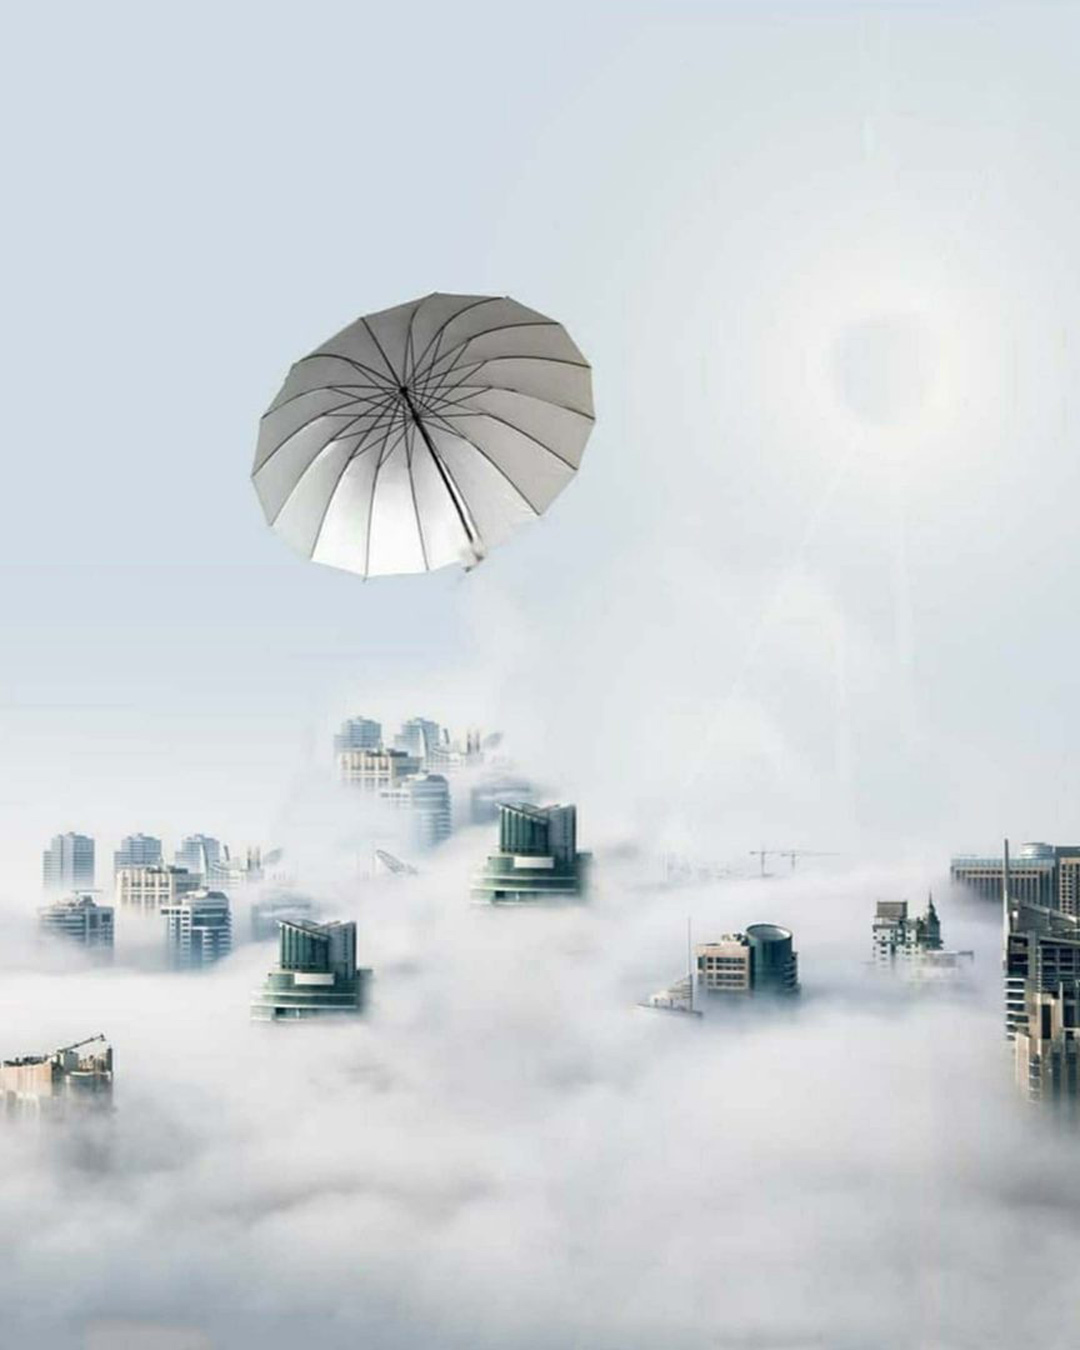 Cloud City PicsArt Background Free Stock Image